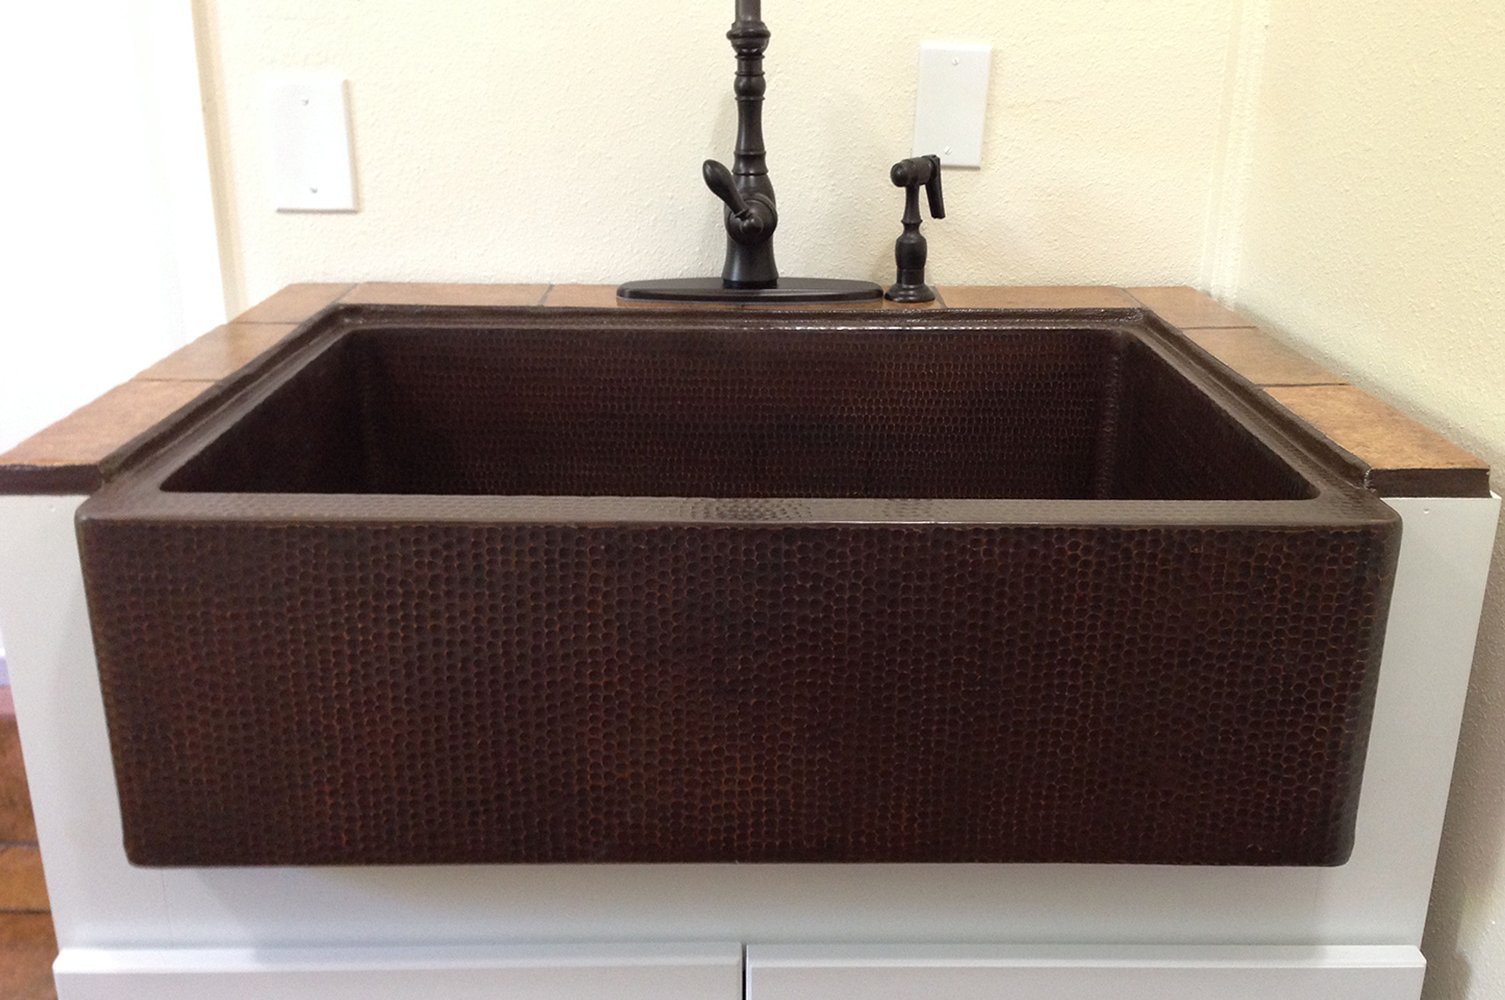 Hammered Copper Apron Front Single Basin Kitchen Sink - Rustic Kitchen & Bath - Kitchen Sink - Premier Copper Products